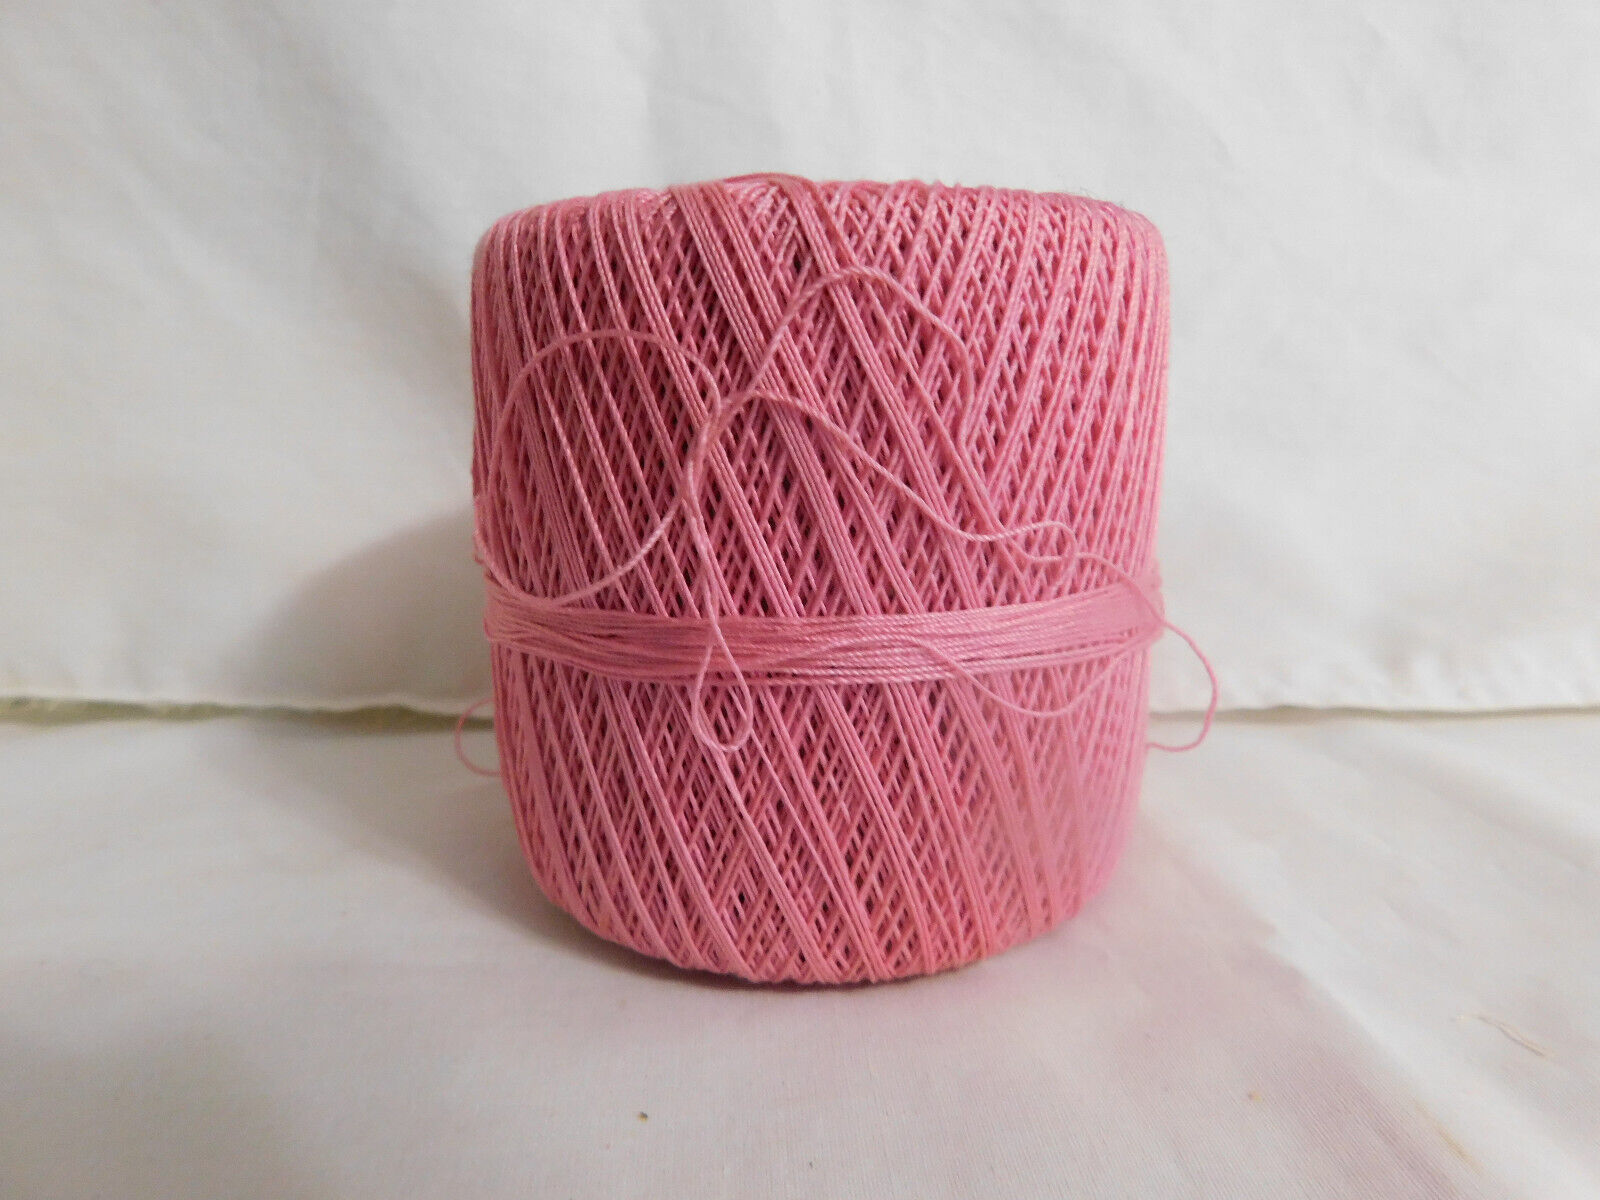 Clarks Mercerized Crochet Thread Boilfast No 30 Pink - $3.99